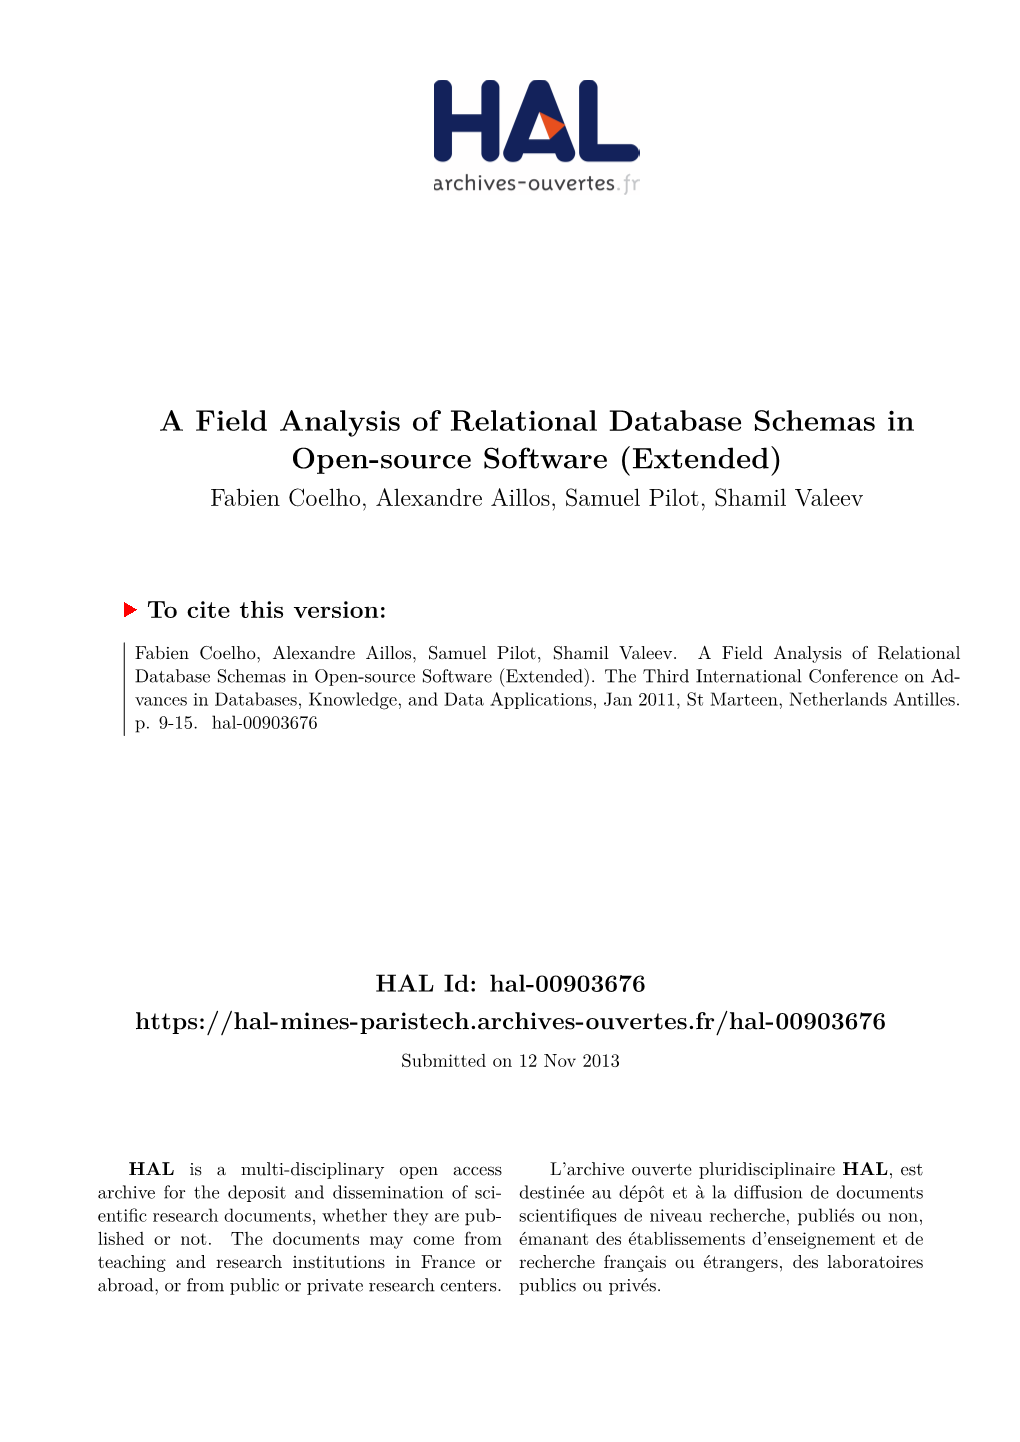 A Field Analysis of Relational Database Schemas in Open-Source Software (Extended) Fabien Coelho, Alexandre Aillos, Samuel Pilot, Shamil Valeev